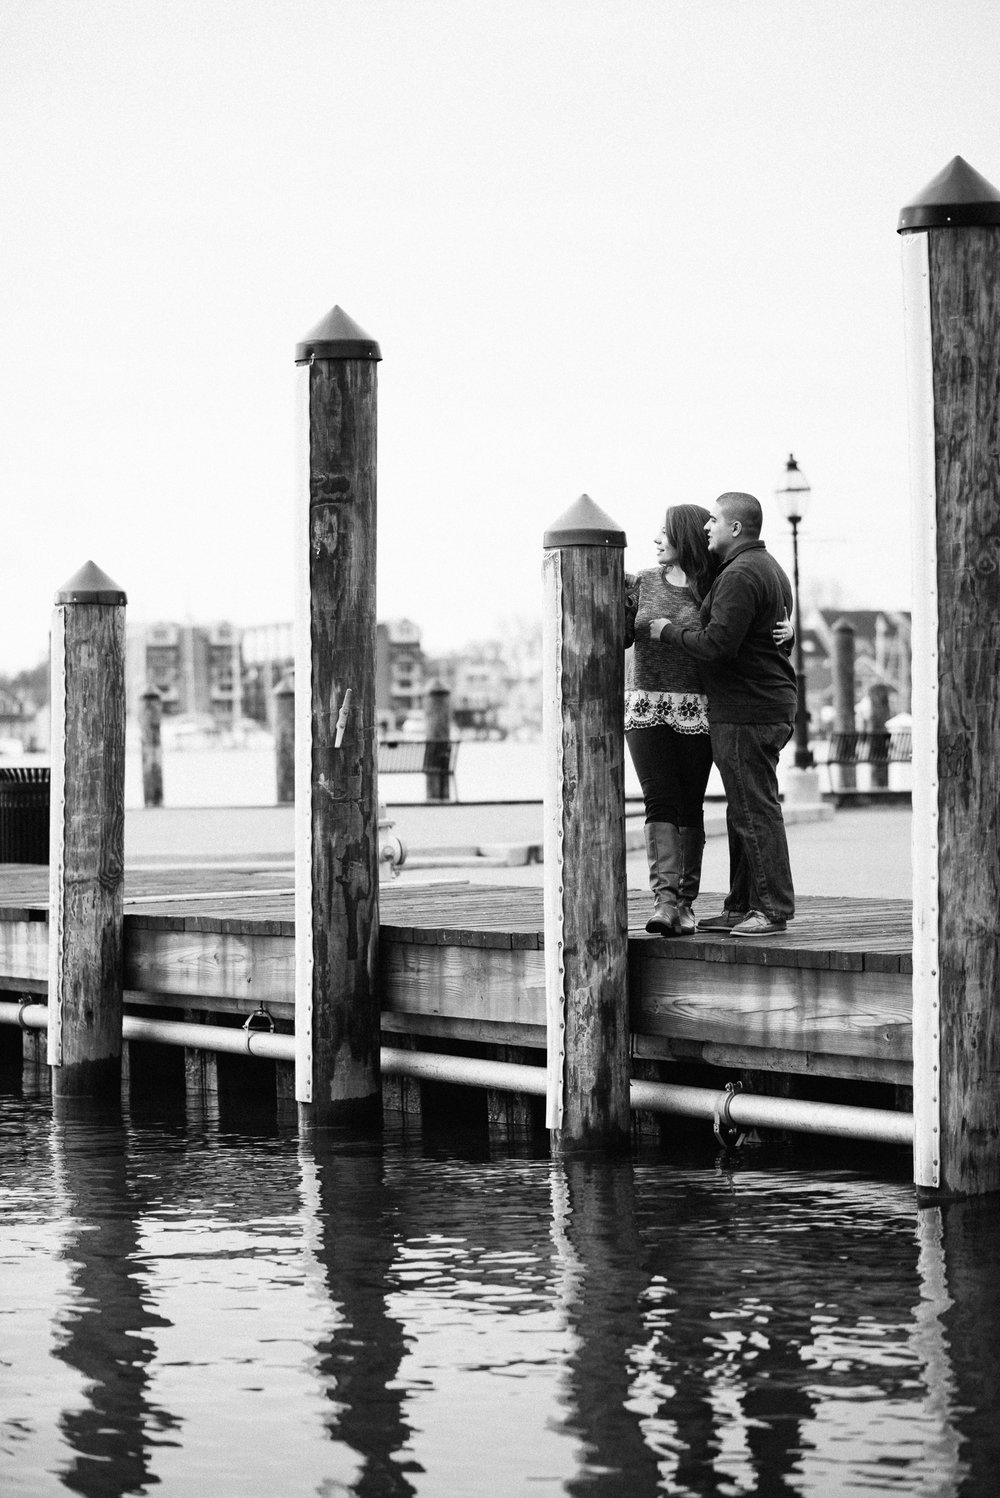  Tori and Dre Engagement in Annapolis MD 04/01/17. Photo Credit: Nicholas Karlin www.nicholaskarlin.com 